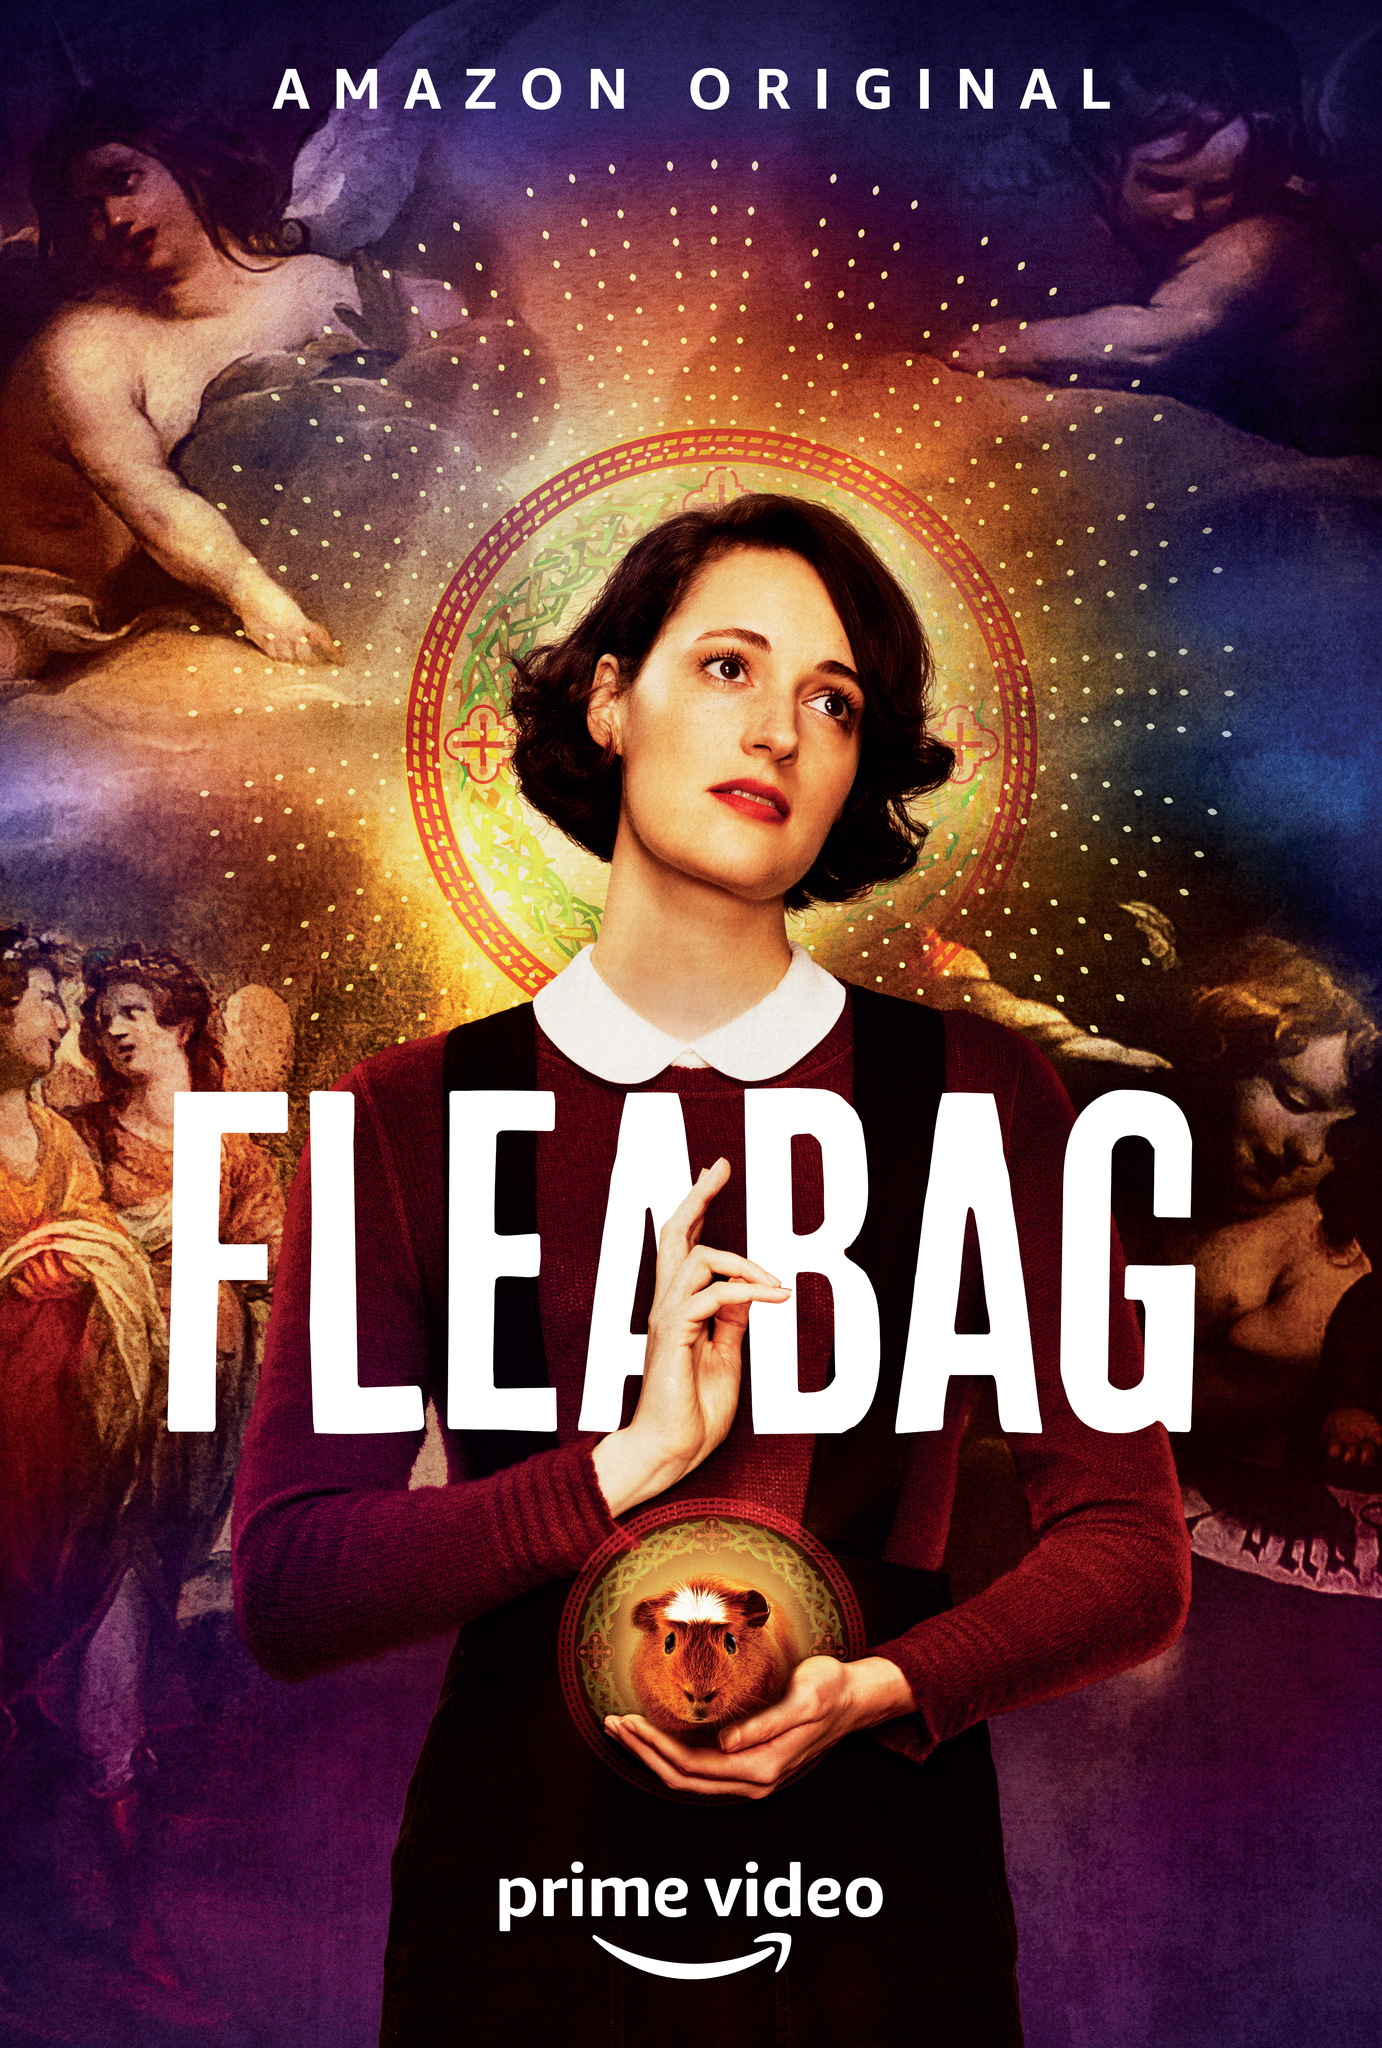 Fleabag comedy web series